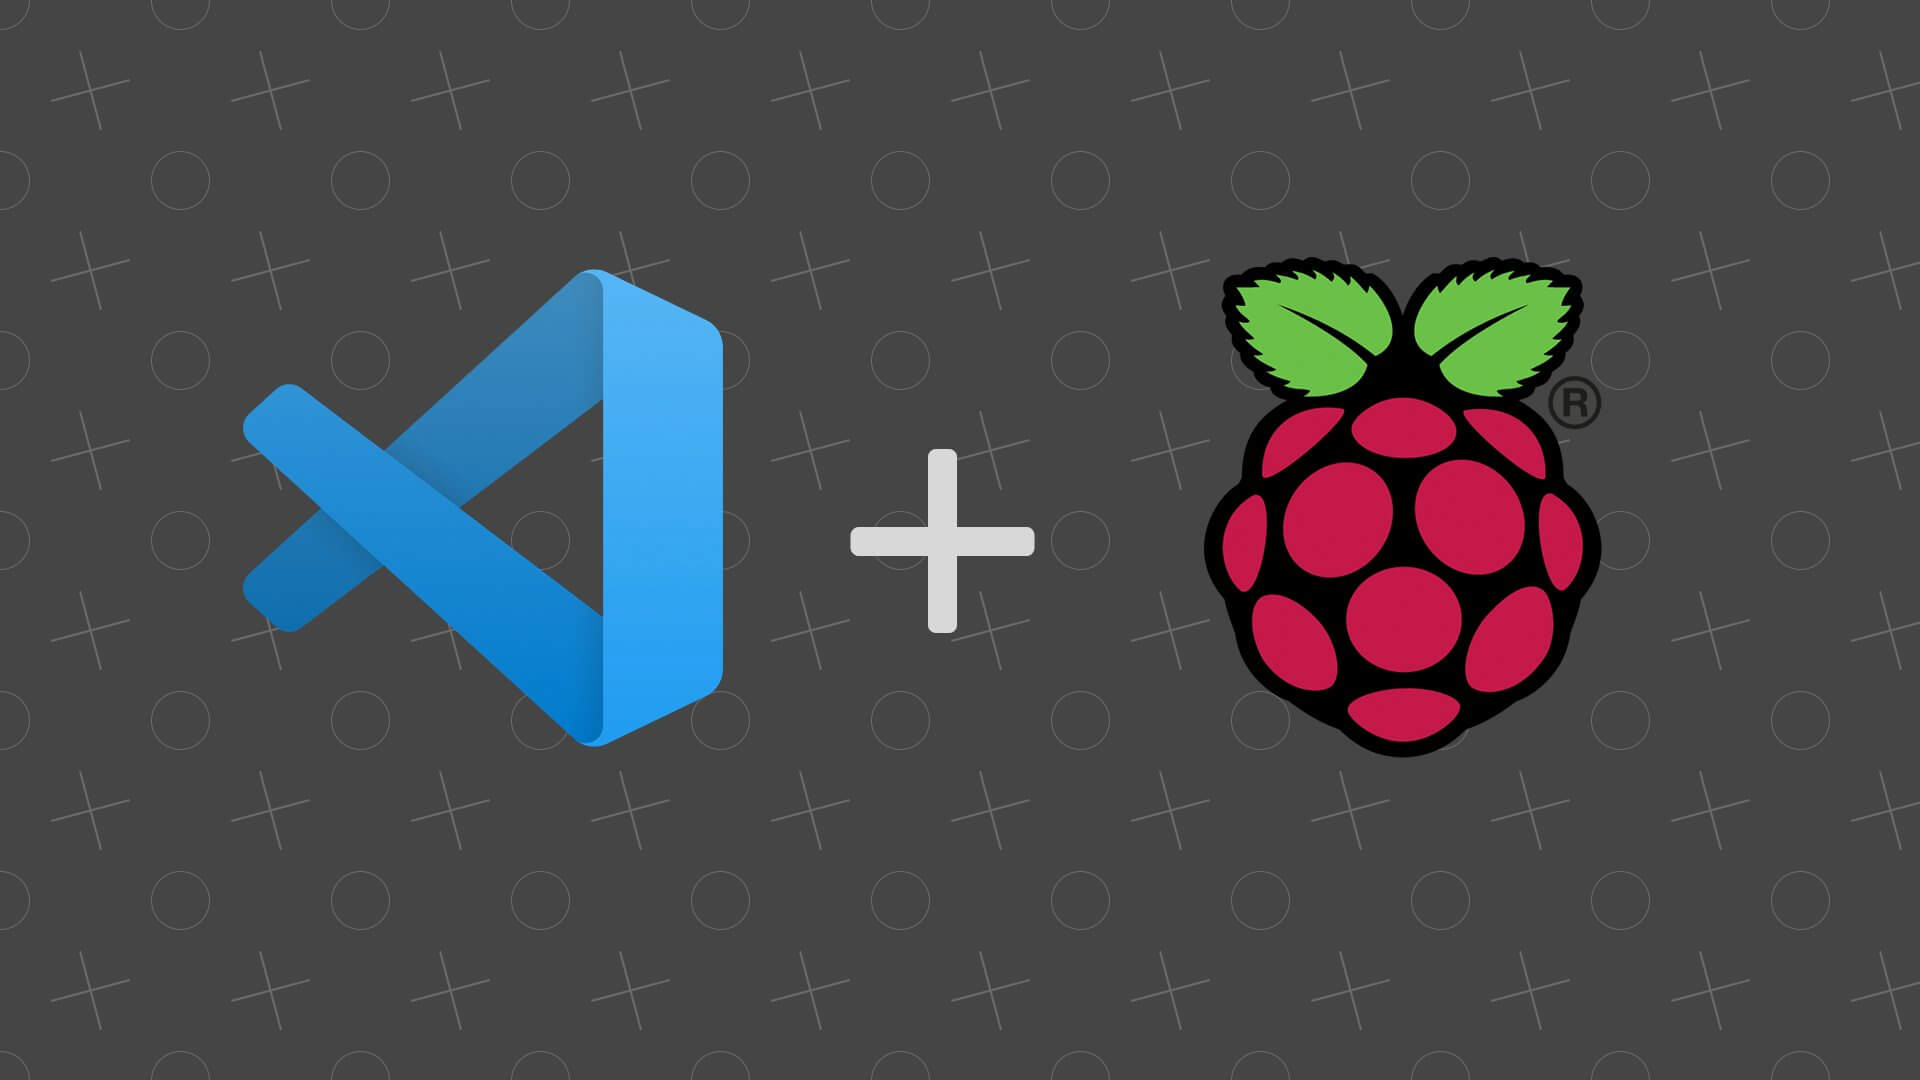 Visual Studio Code Raspberry Pi